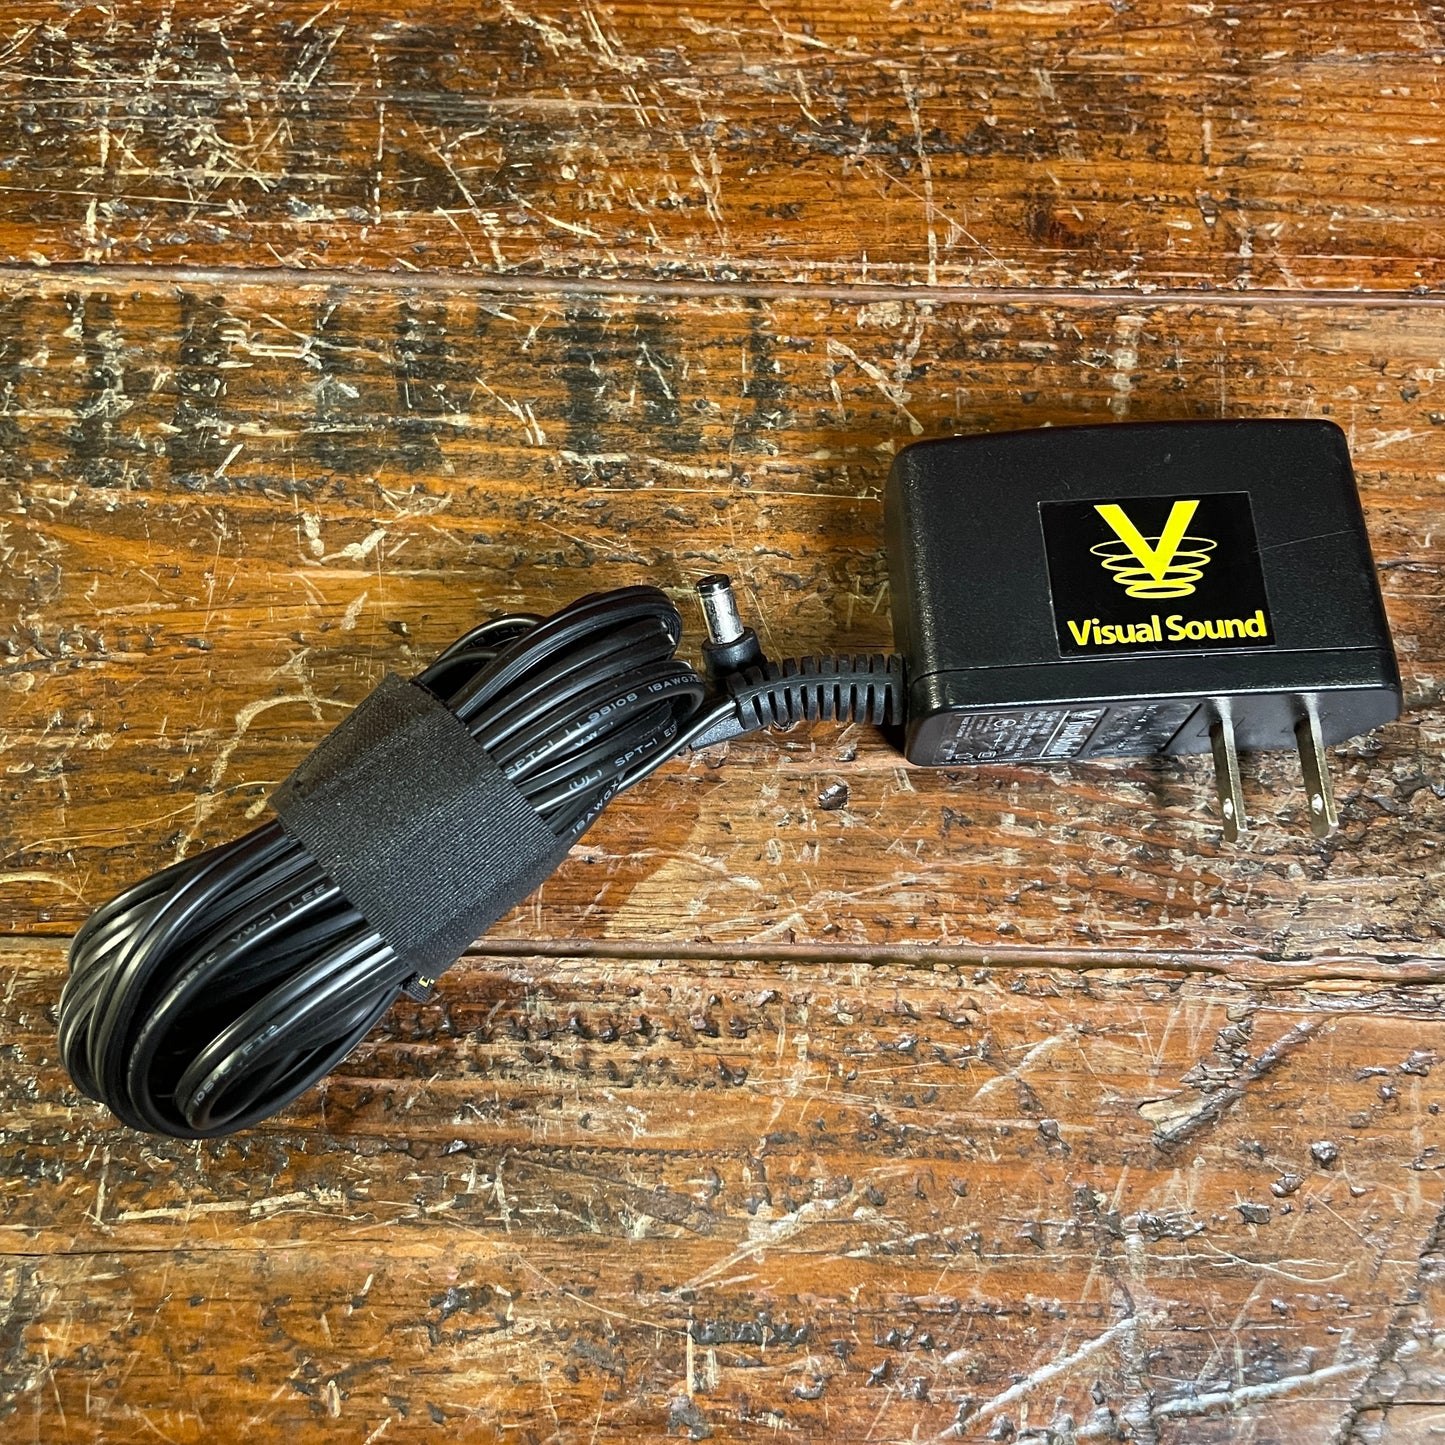 Visual Sound 1 SPOT 9V Power Supply NW1-US